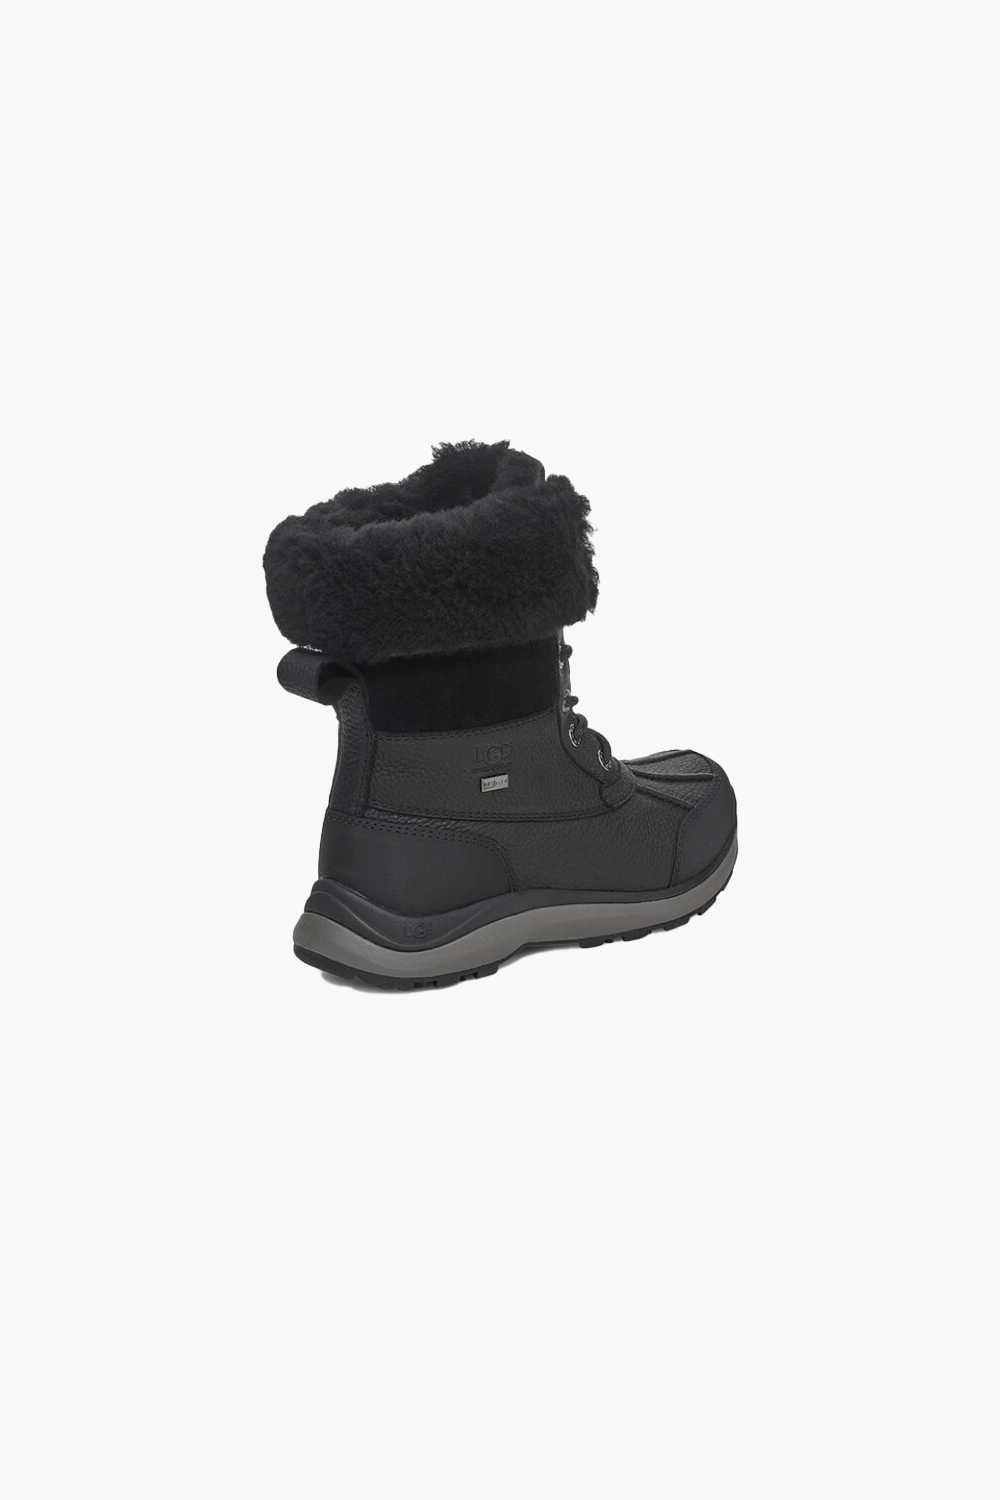 UGG Women's Adirondack Boot III 1095141 in Black/Black